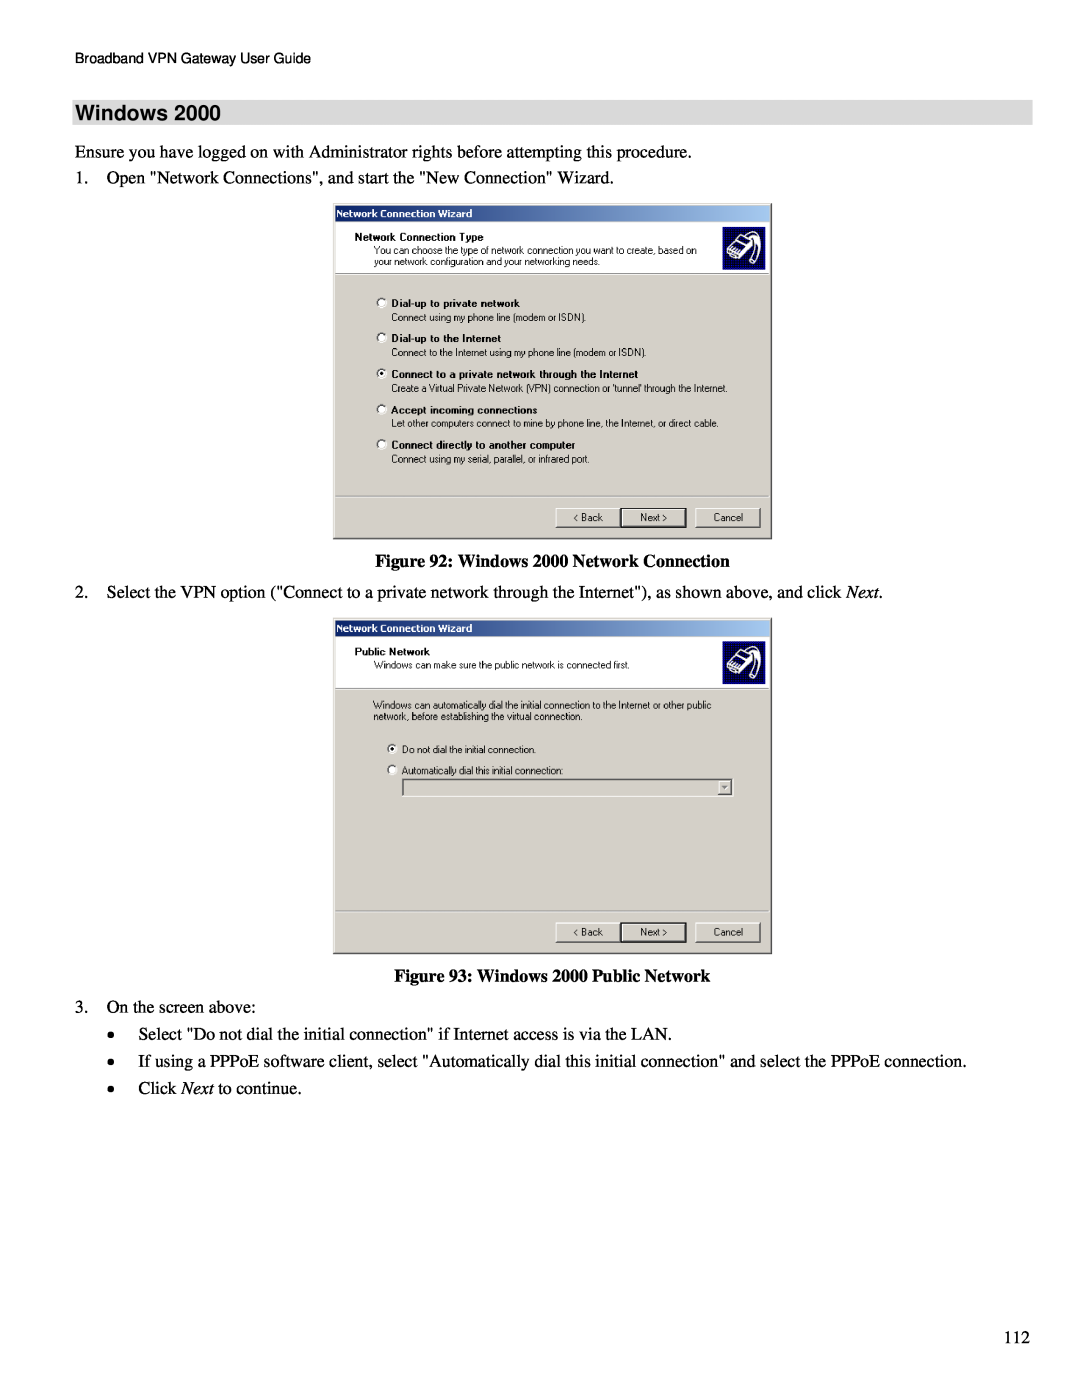 TRENDnet TW100-BRV324 manual Windows 2000 Network Connection, Windows 2000 Public Network 